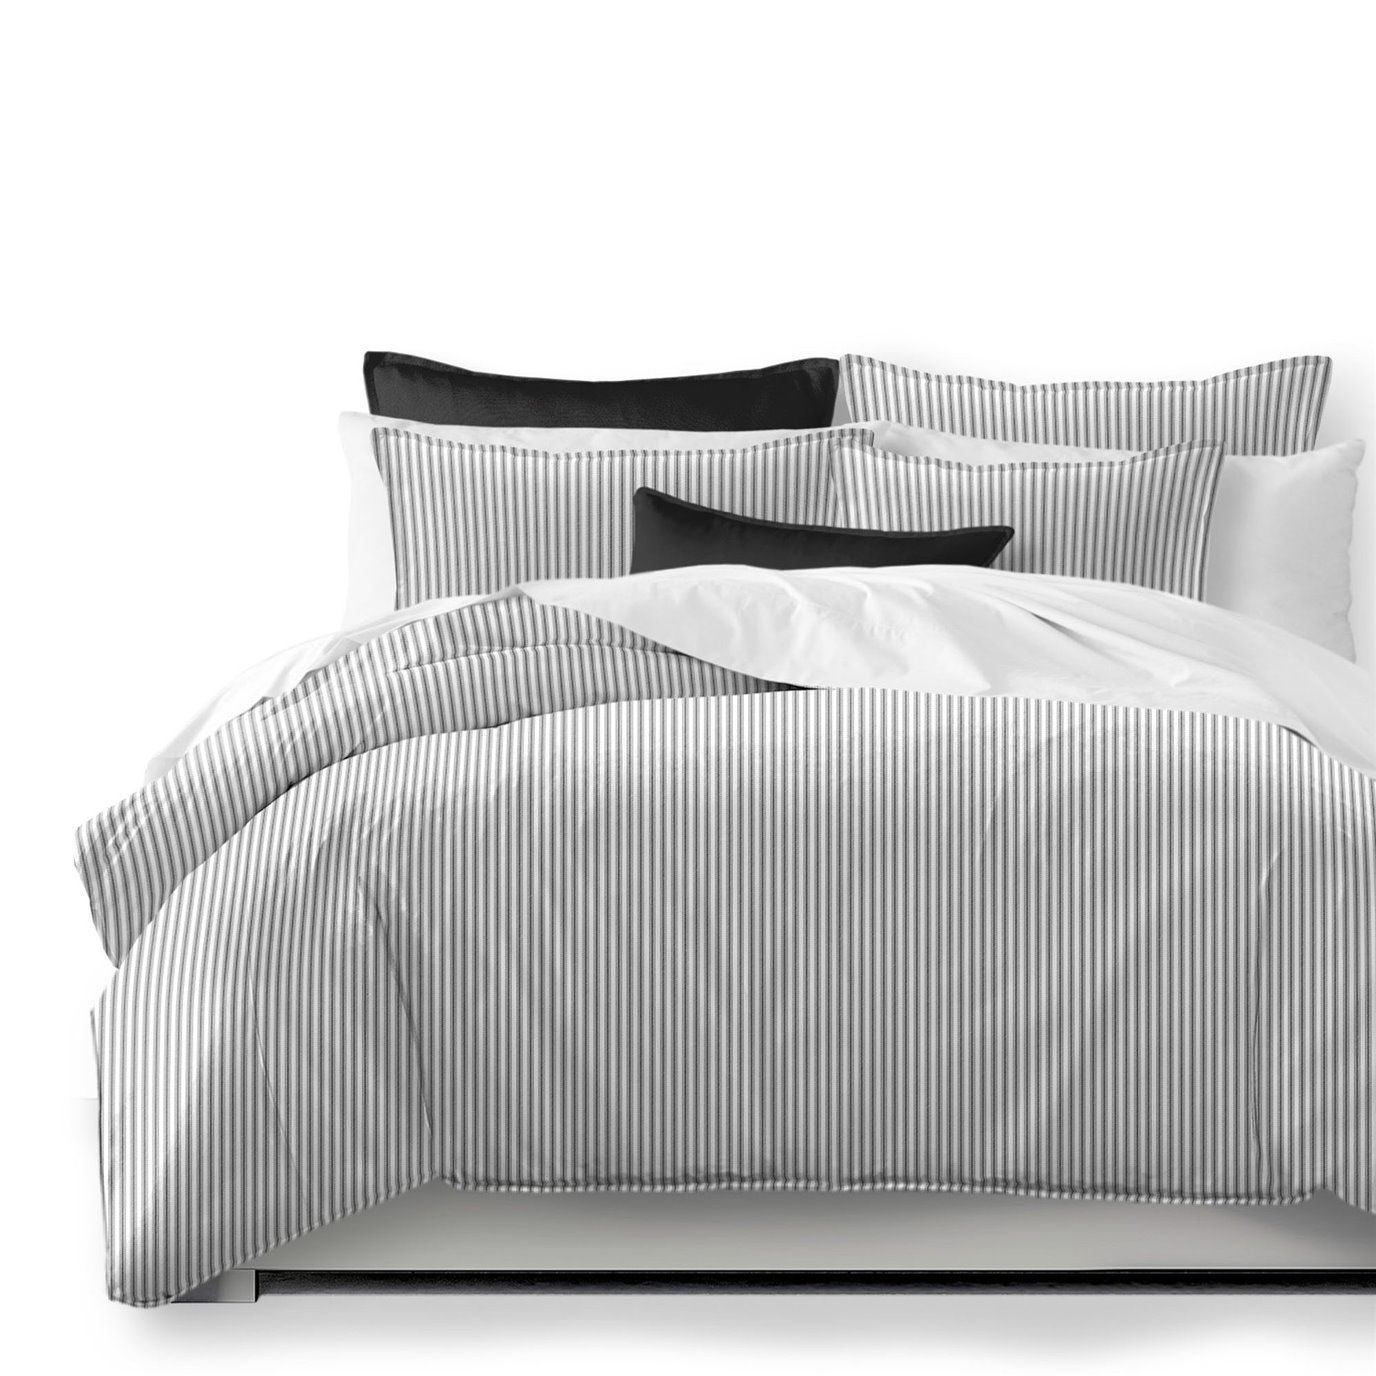 Cruz Ticking Stripes White/Black Coverlet and Pillow Sham(s) Set - Size Super Queen